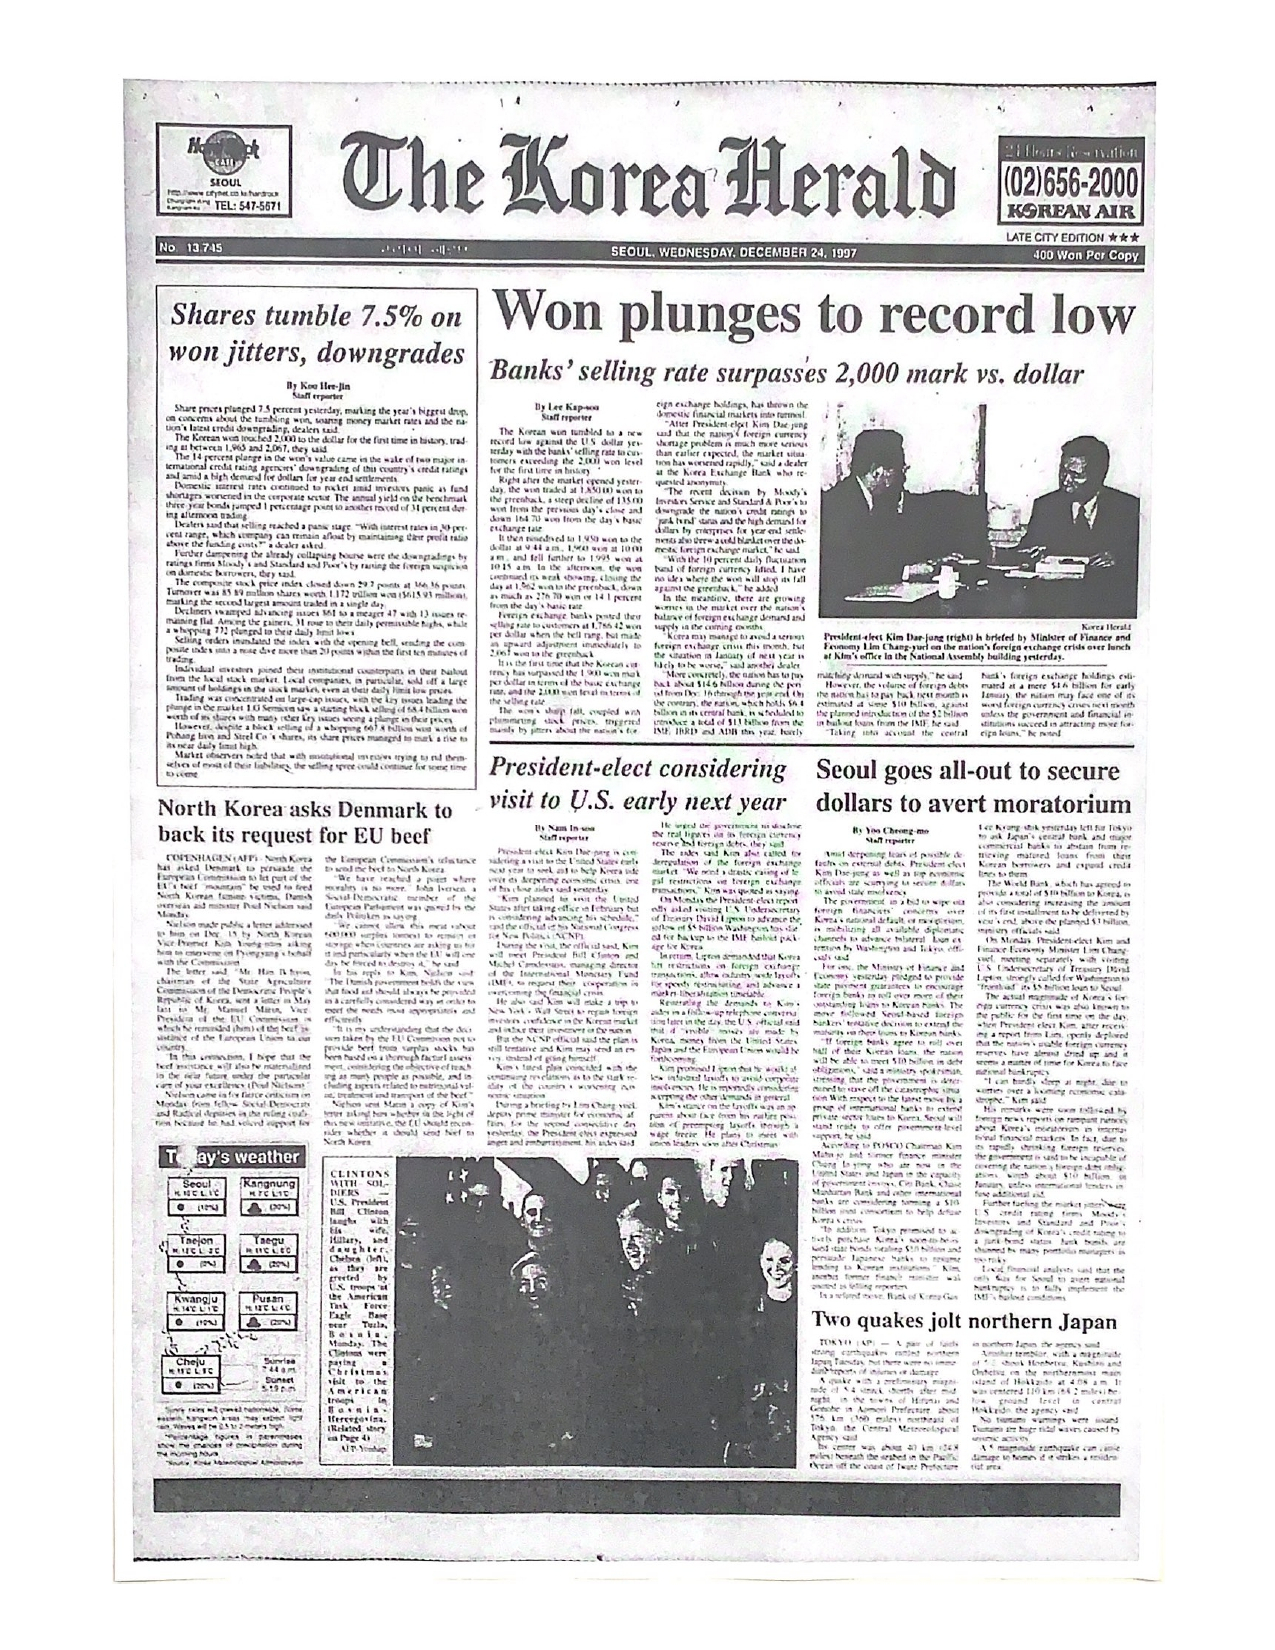 The Dec. 24, 1997 edition of The Korea Herald (The Korea Herald)